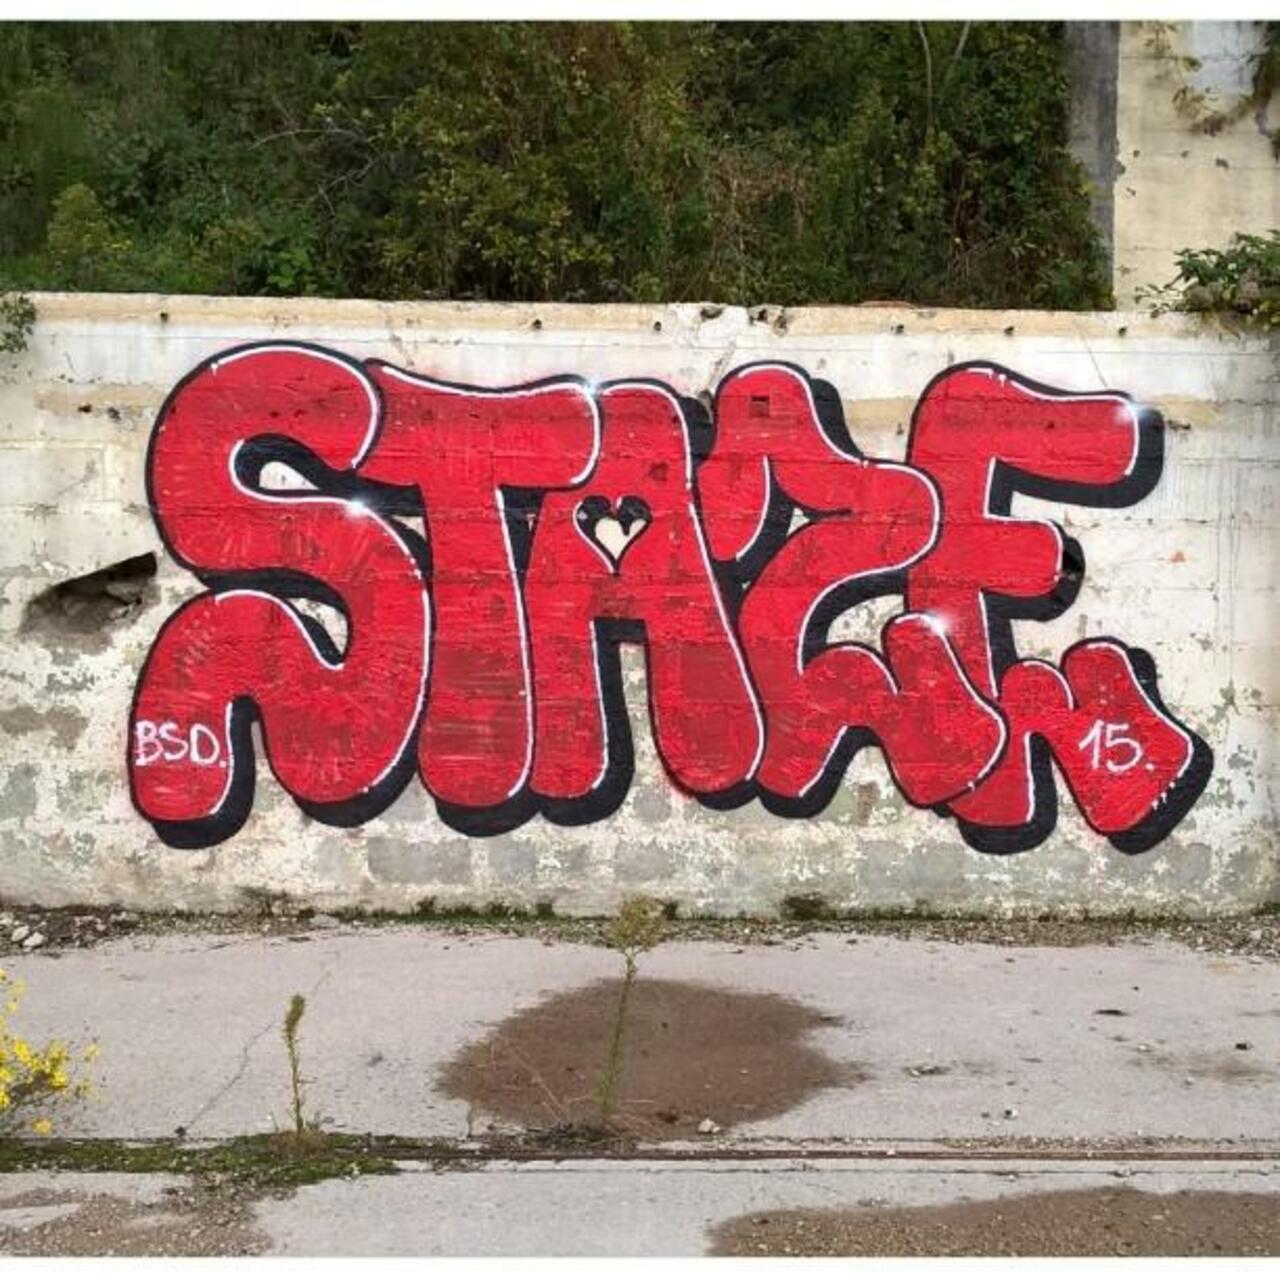 STAZE
#BSD #streetart #graffiti #graff #art #fatcap #bombing #sprayart #spraycanart #wallart #handstyle #lettering … http://t.co/r4HeiL7vKn